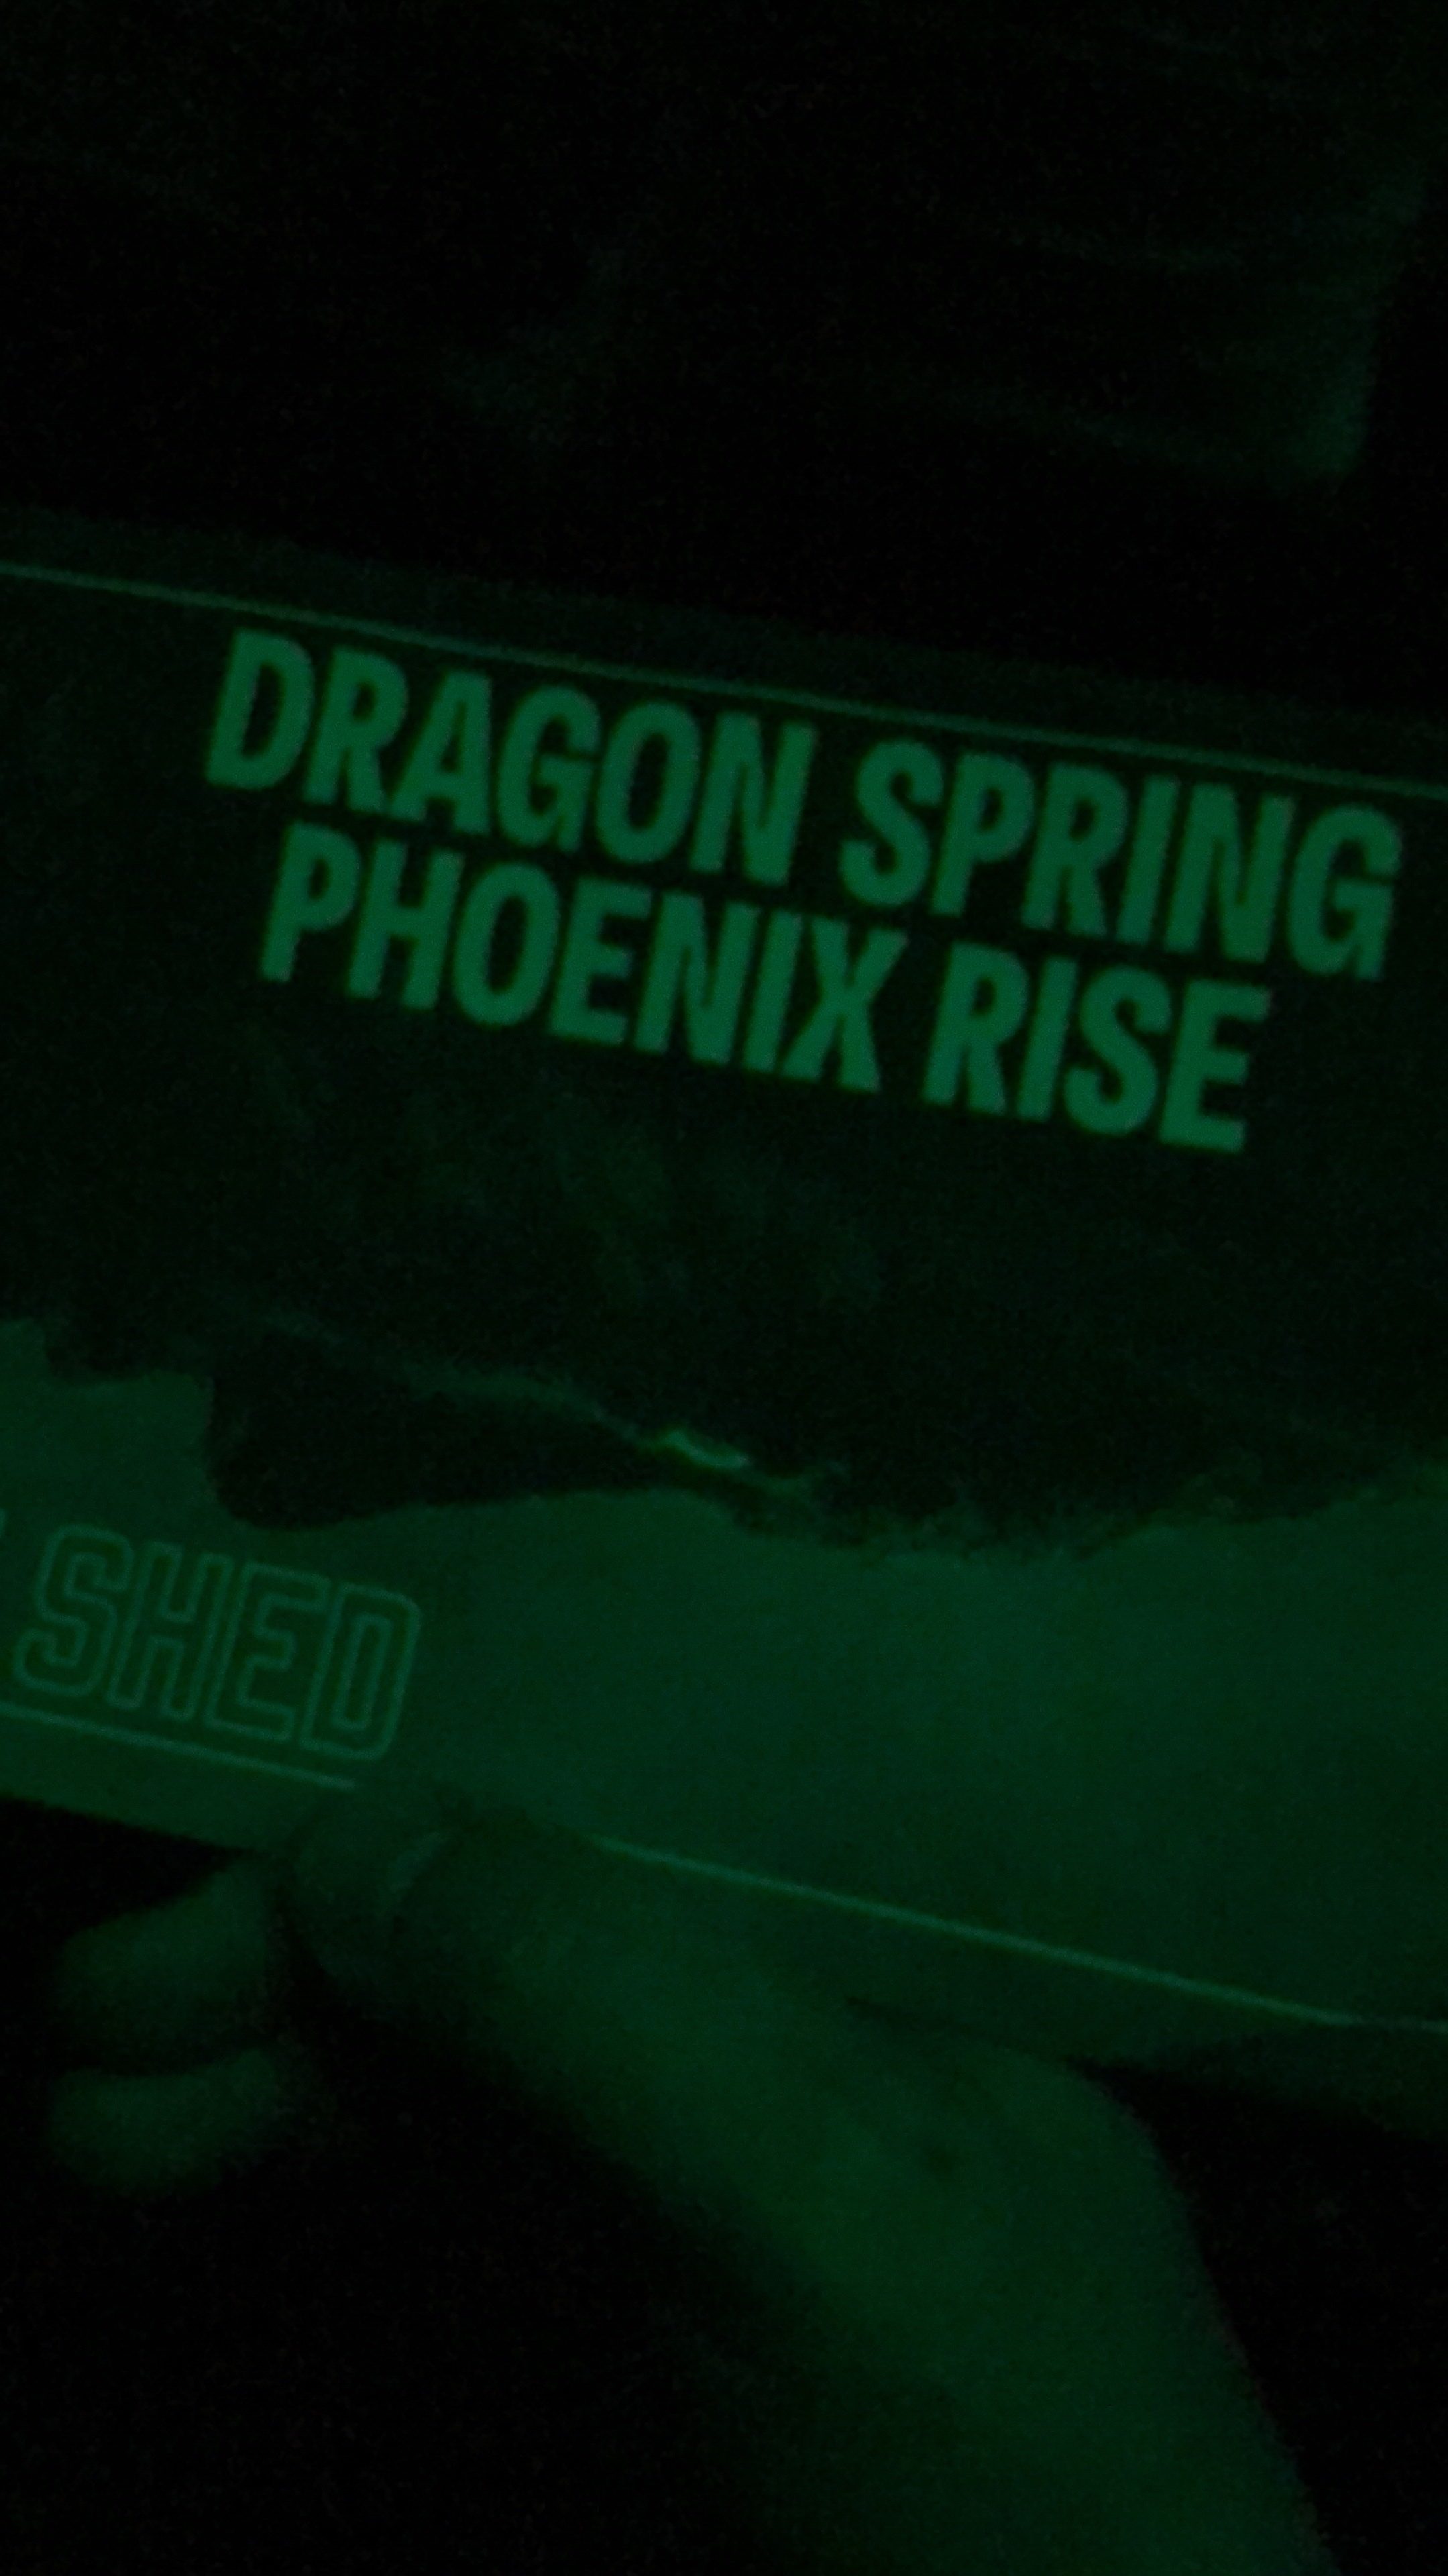 dragon spring phoenix rise nyc